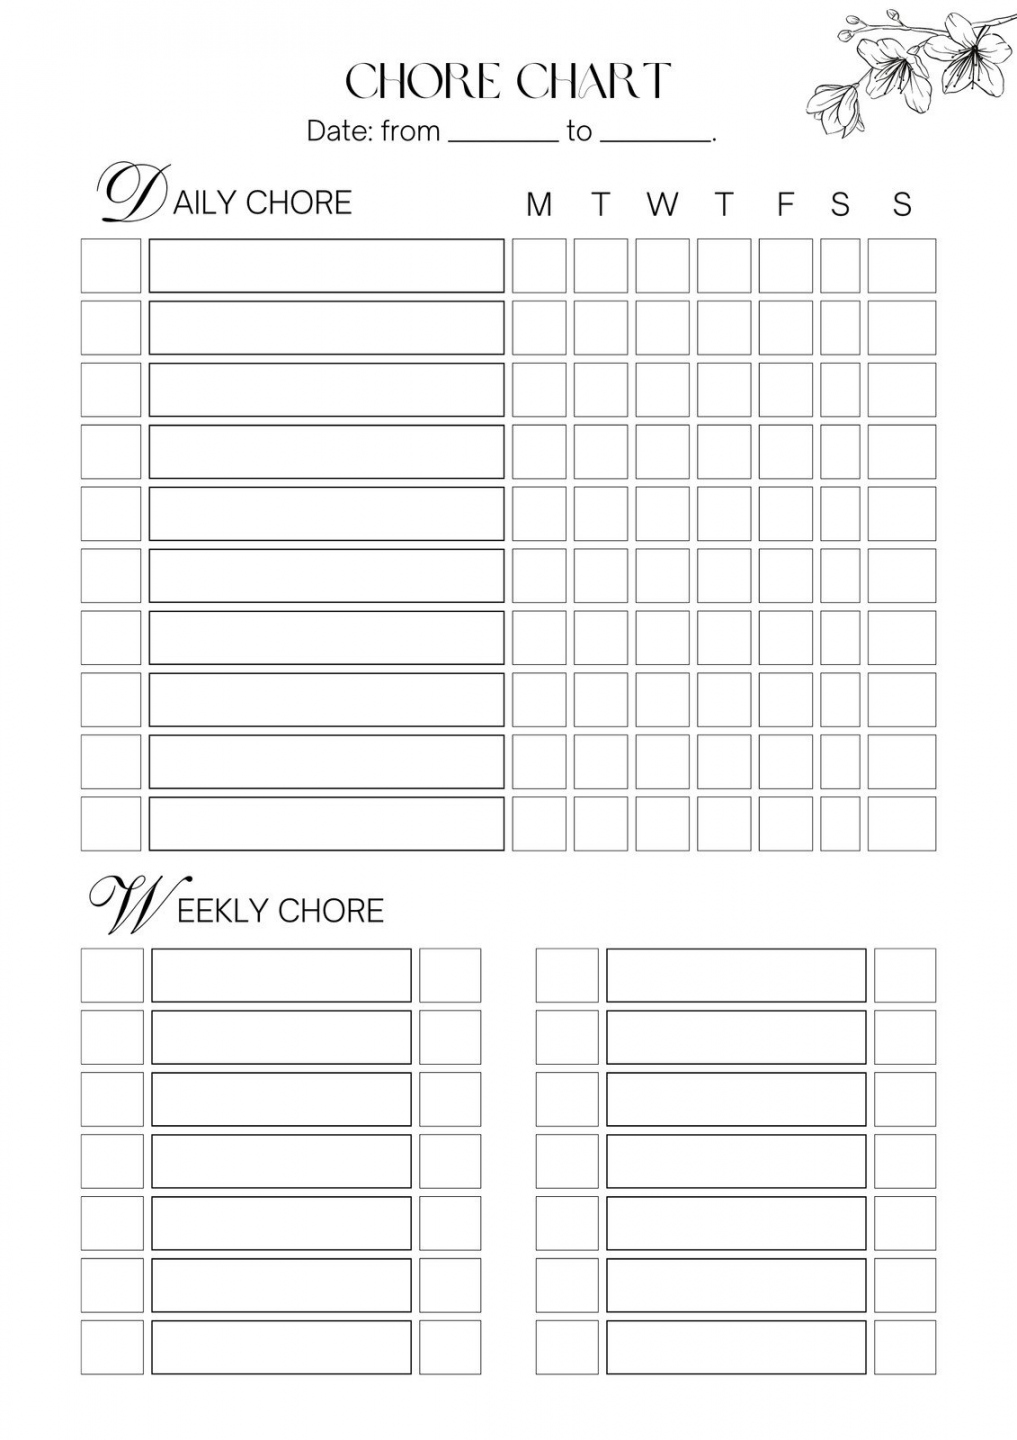 Free Printable Chore Chart - Printable - Free customizable chore chart templates to print  Canva